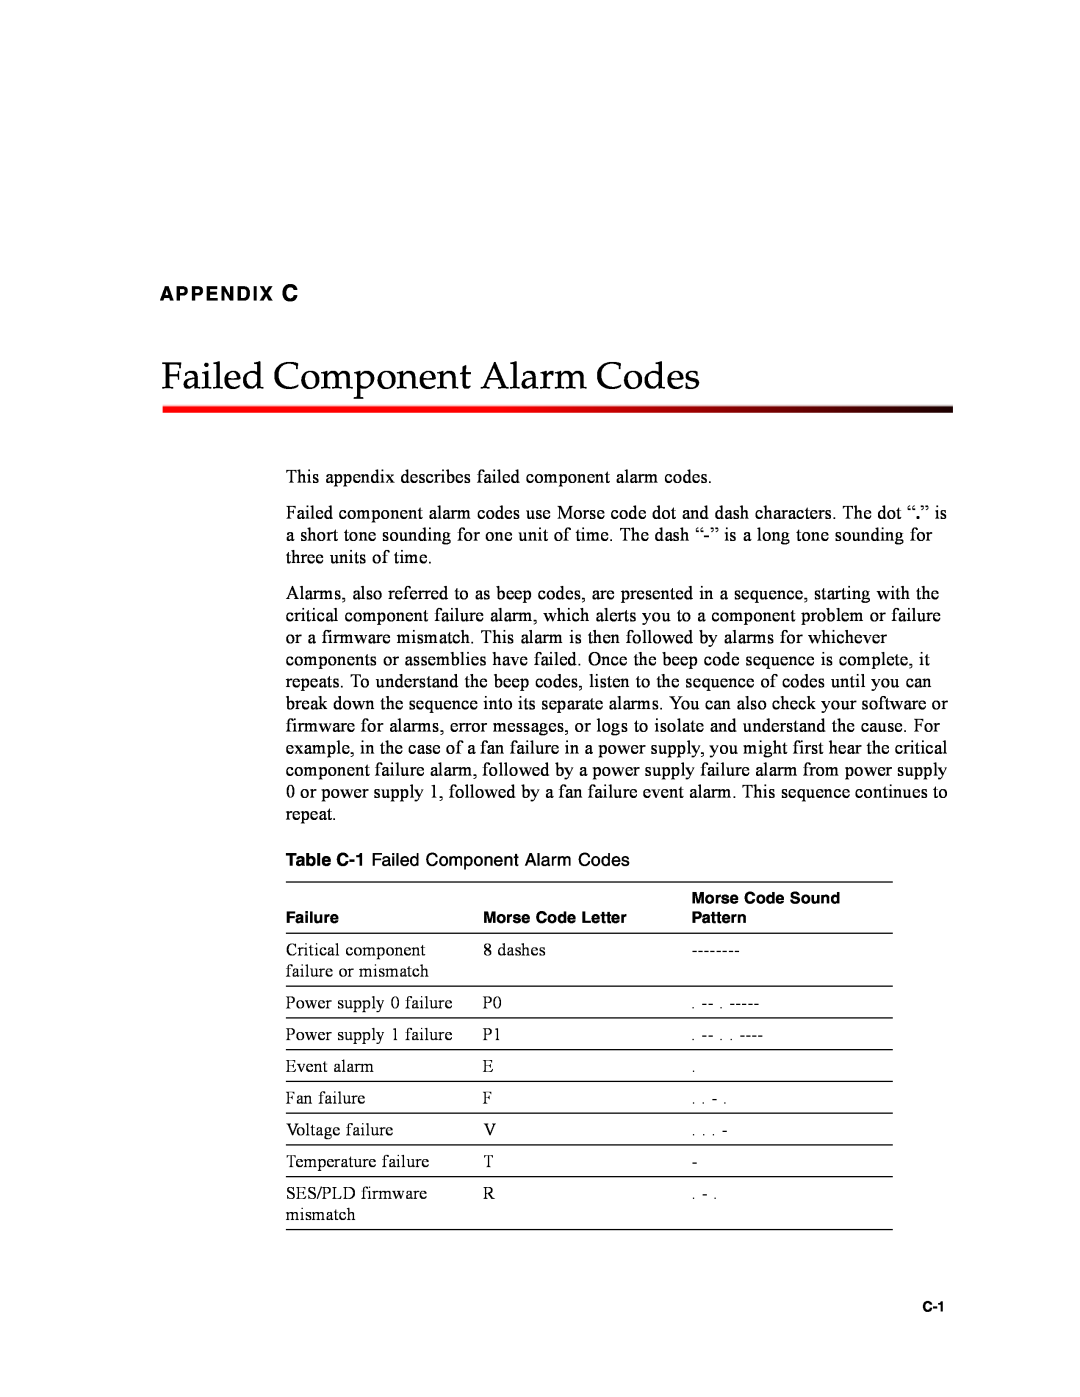 Dot Hill Systems II 200 FC service manual Failed Component Alarm Codes, Appendix C 